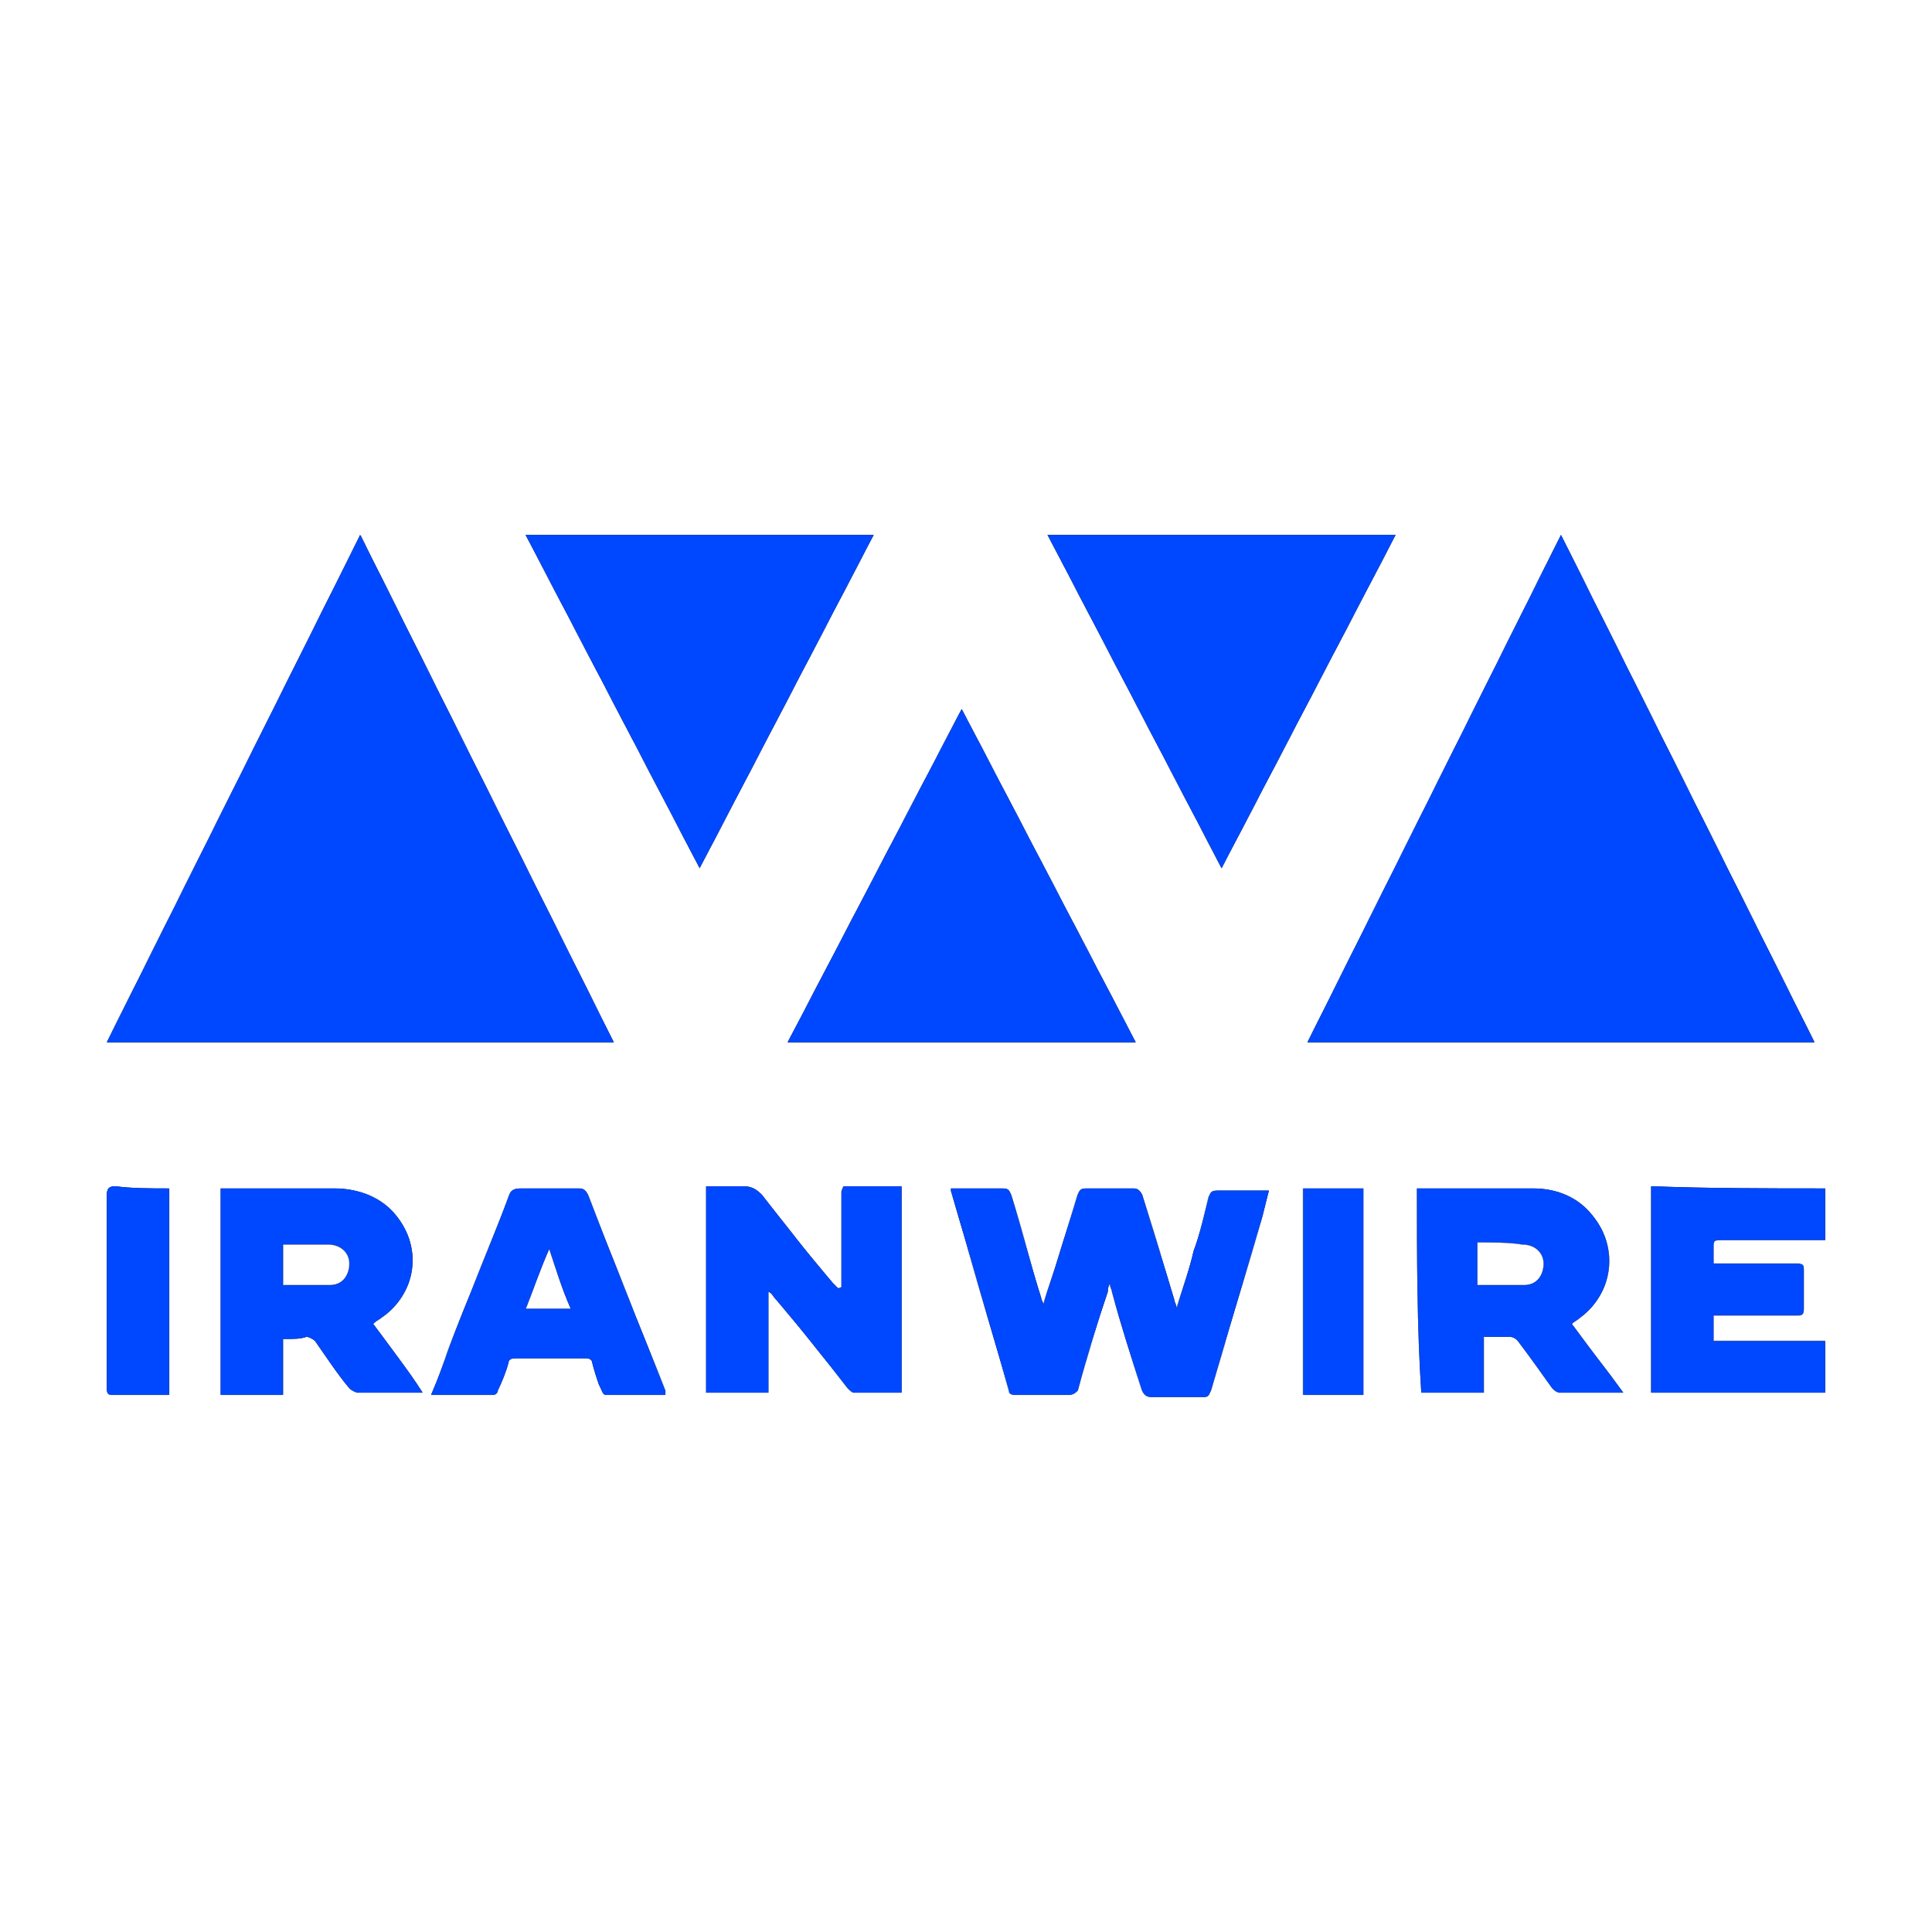 Iranwire Logo Transparent Picture